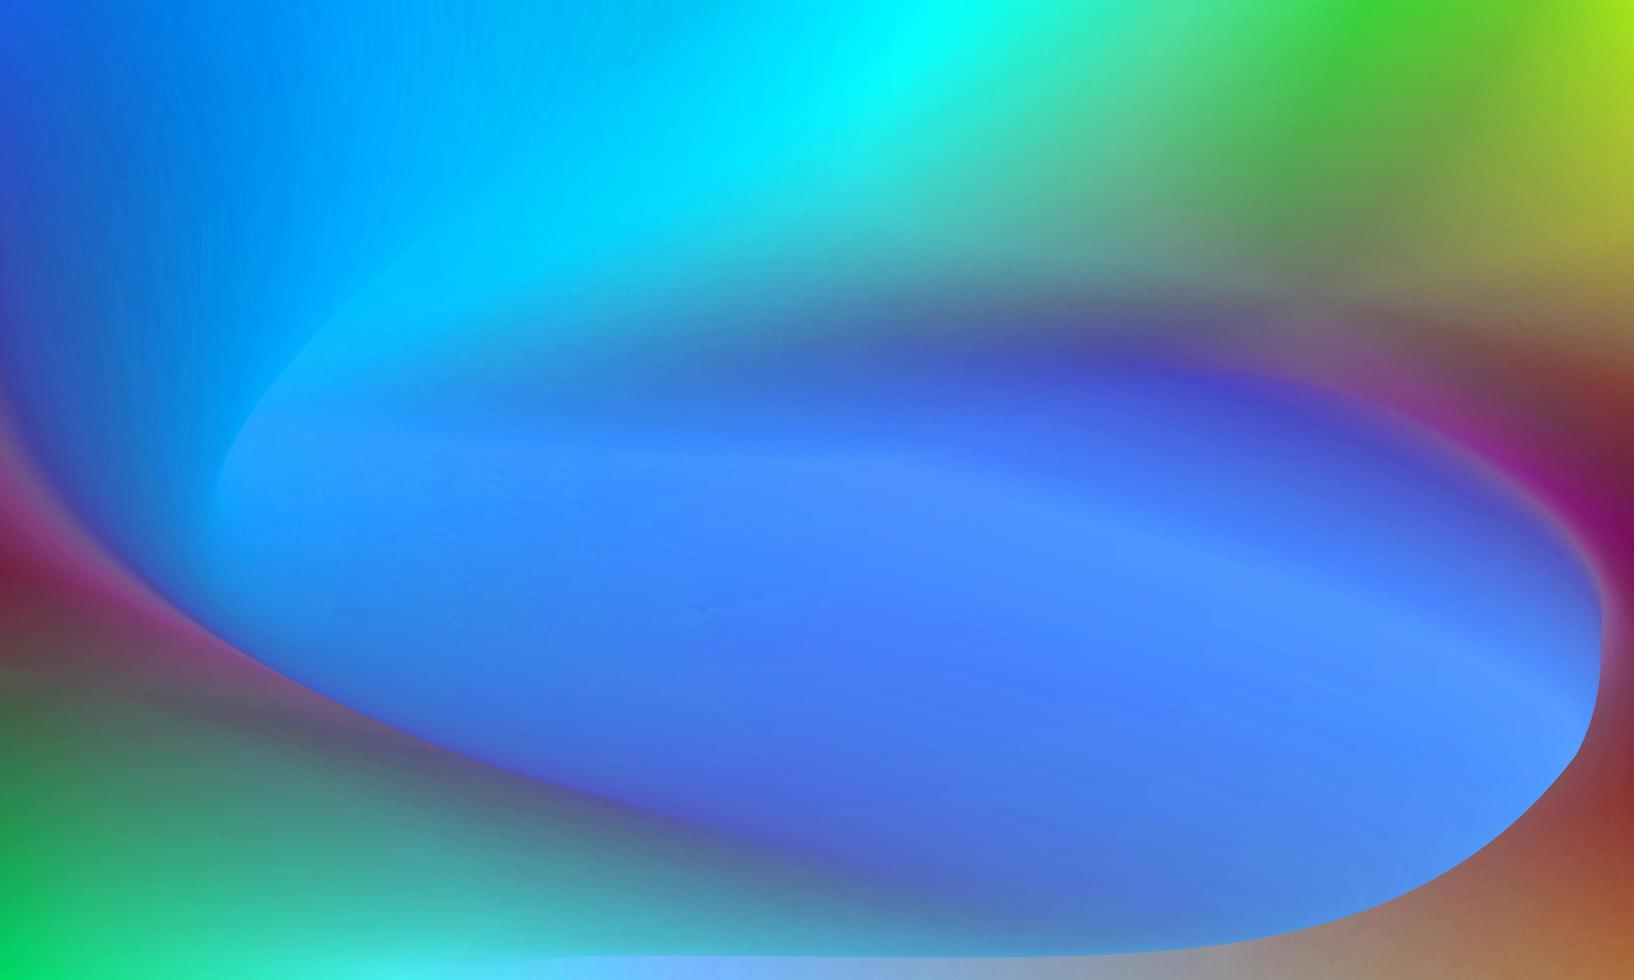 dark blue abstract light leak distortion refraction swirl overlay heavy texture with rainbow dust effects pattern. photo